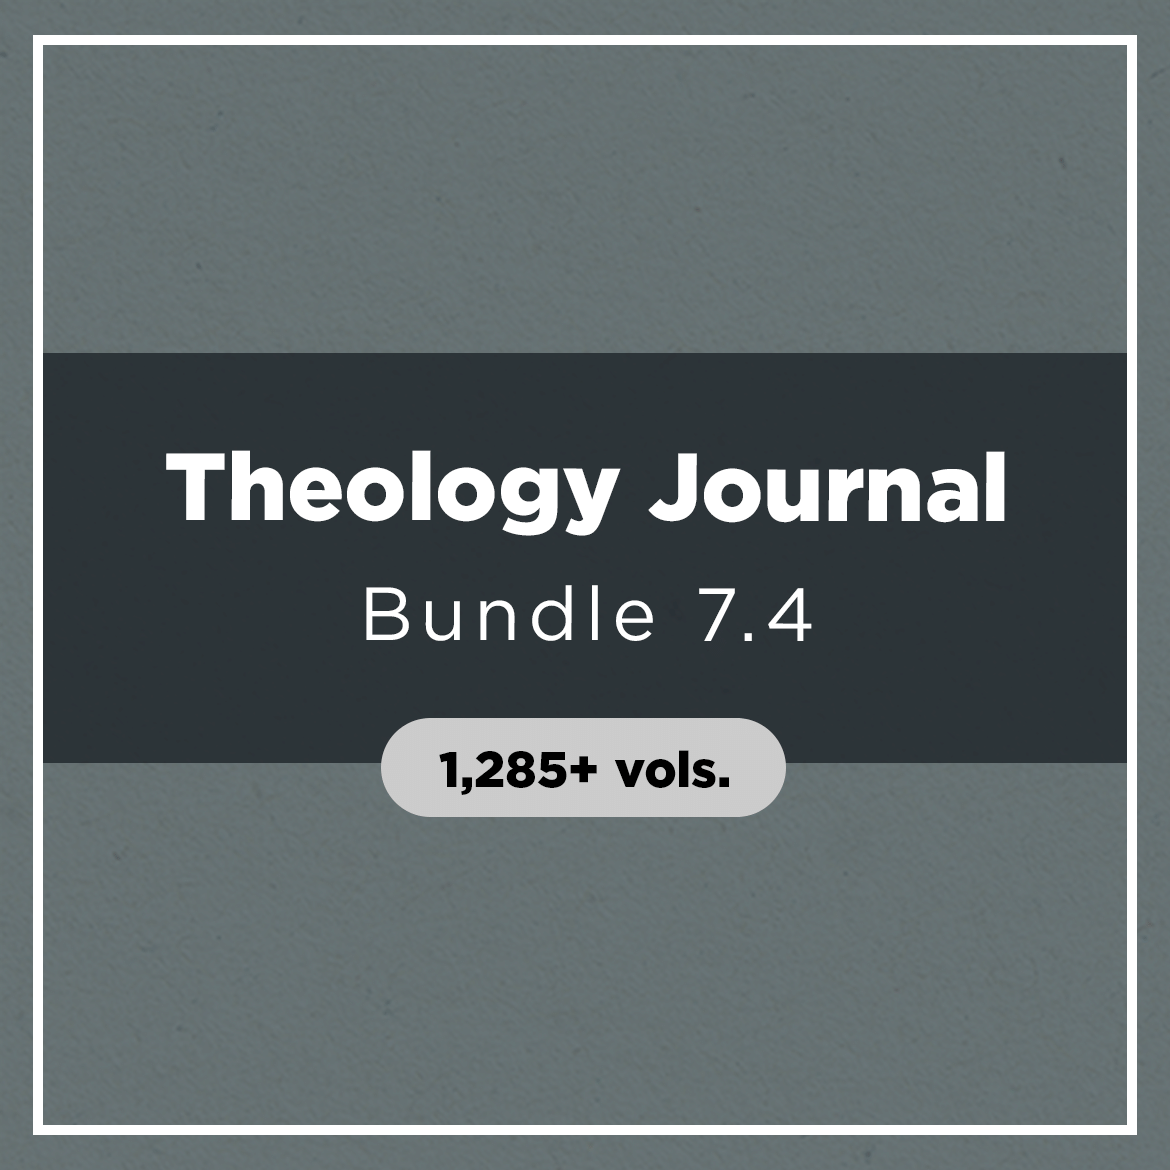 Theology Journal Bundle 7.4 (1,285+ vols.)